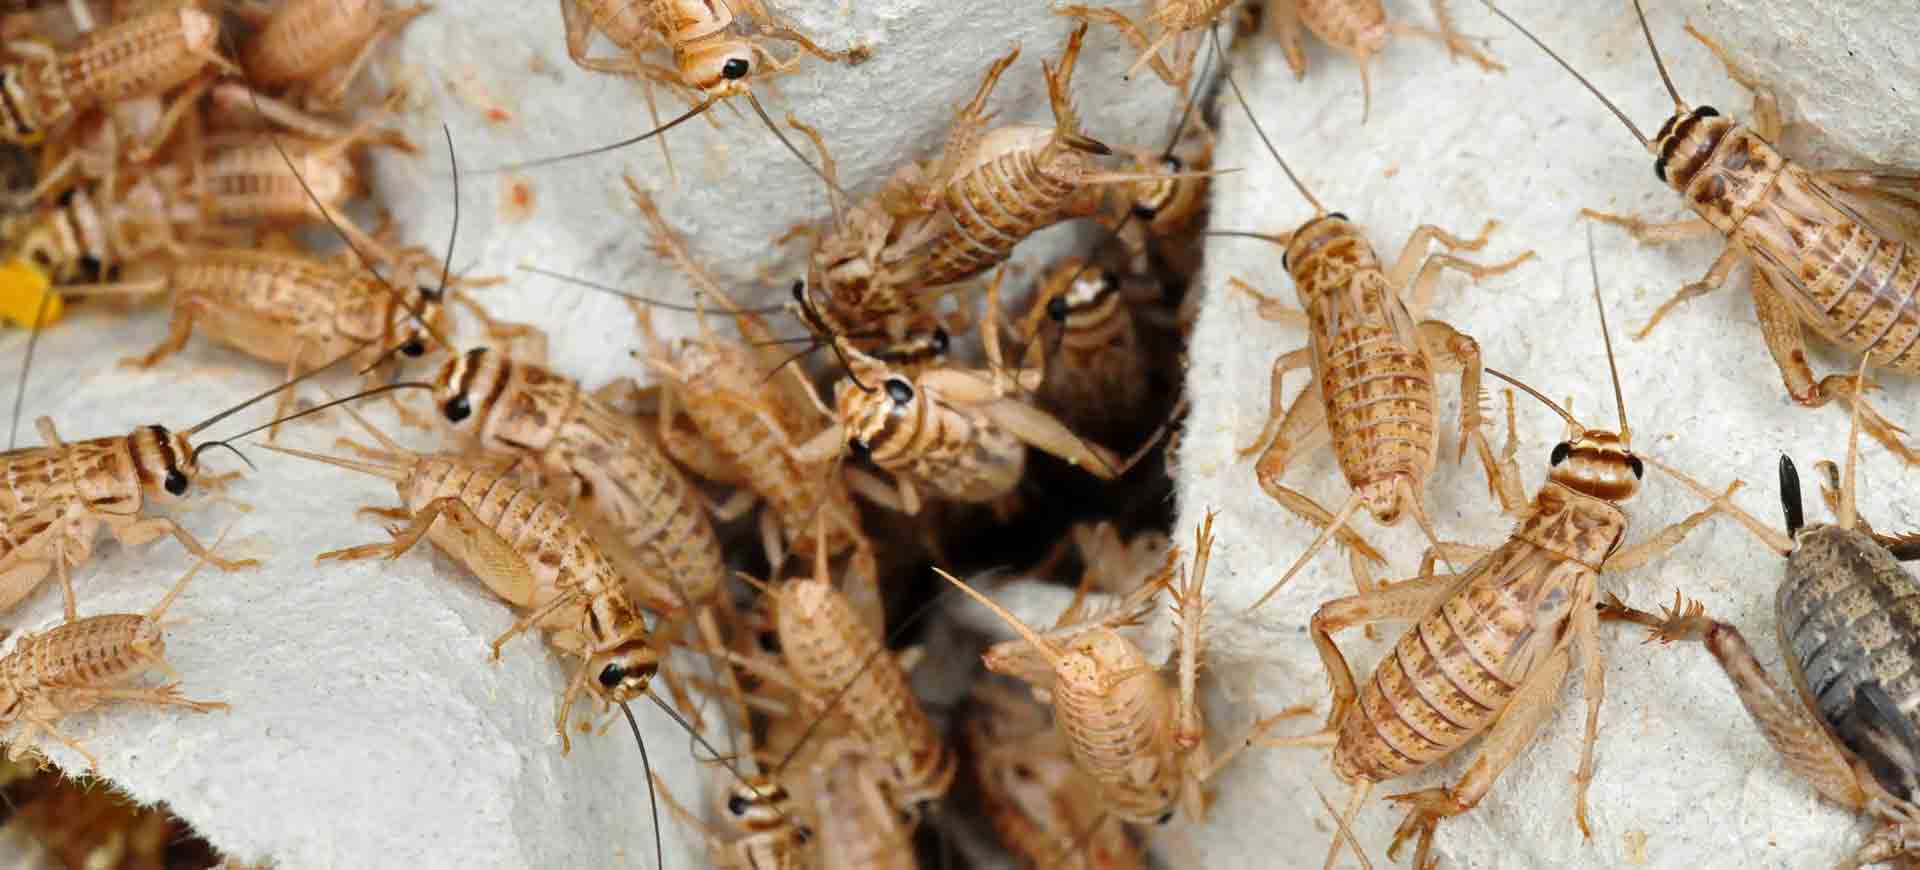 cricket pest control pacific beach